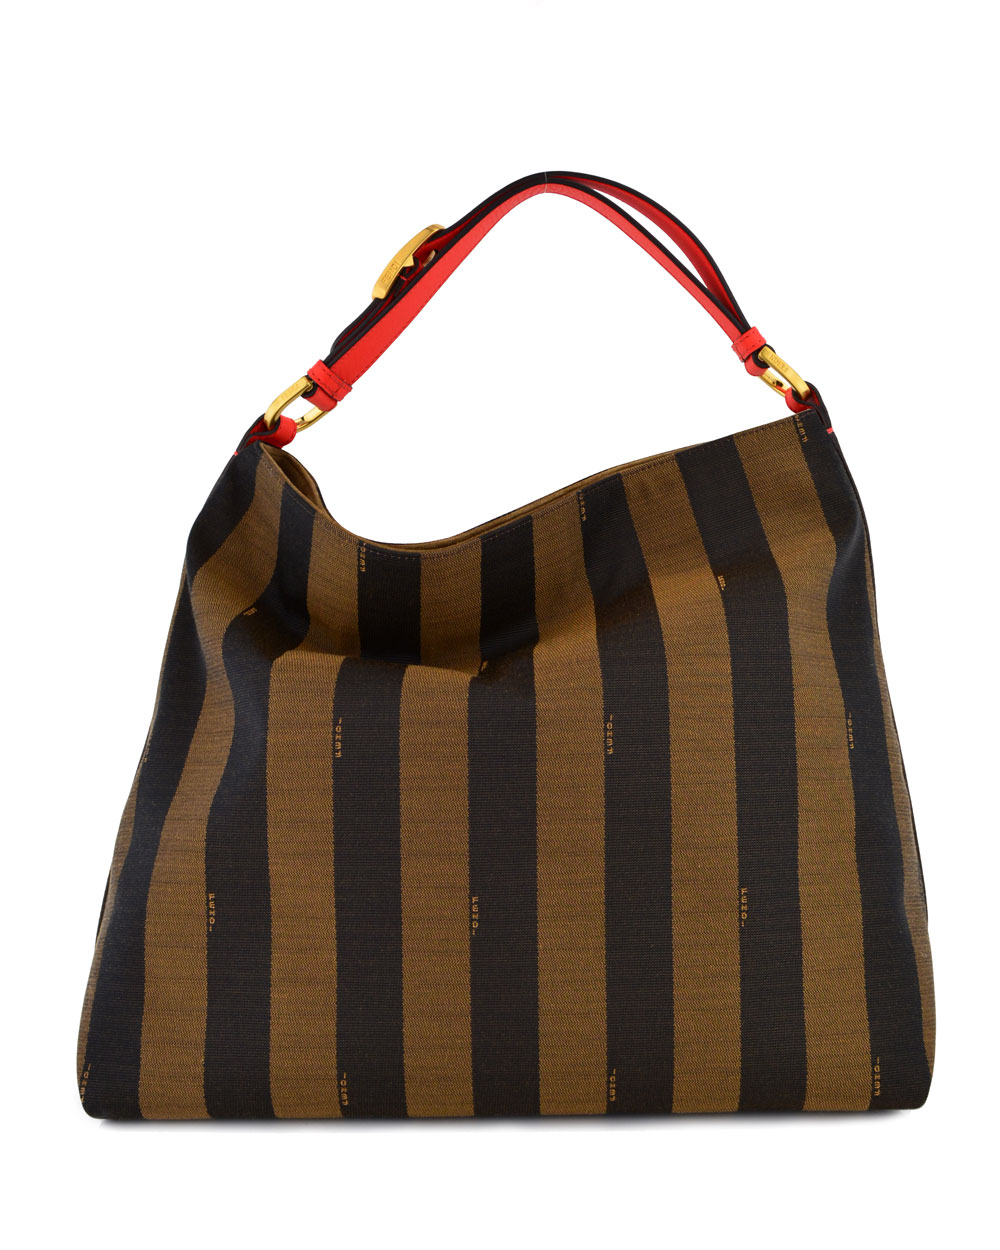 Fendi Pequin Stripe and Poppy Borsa Hobo Bag in Brown - Lyst